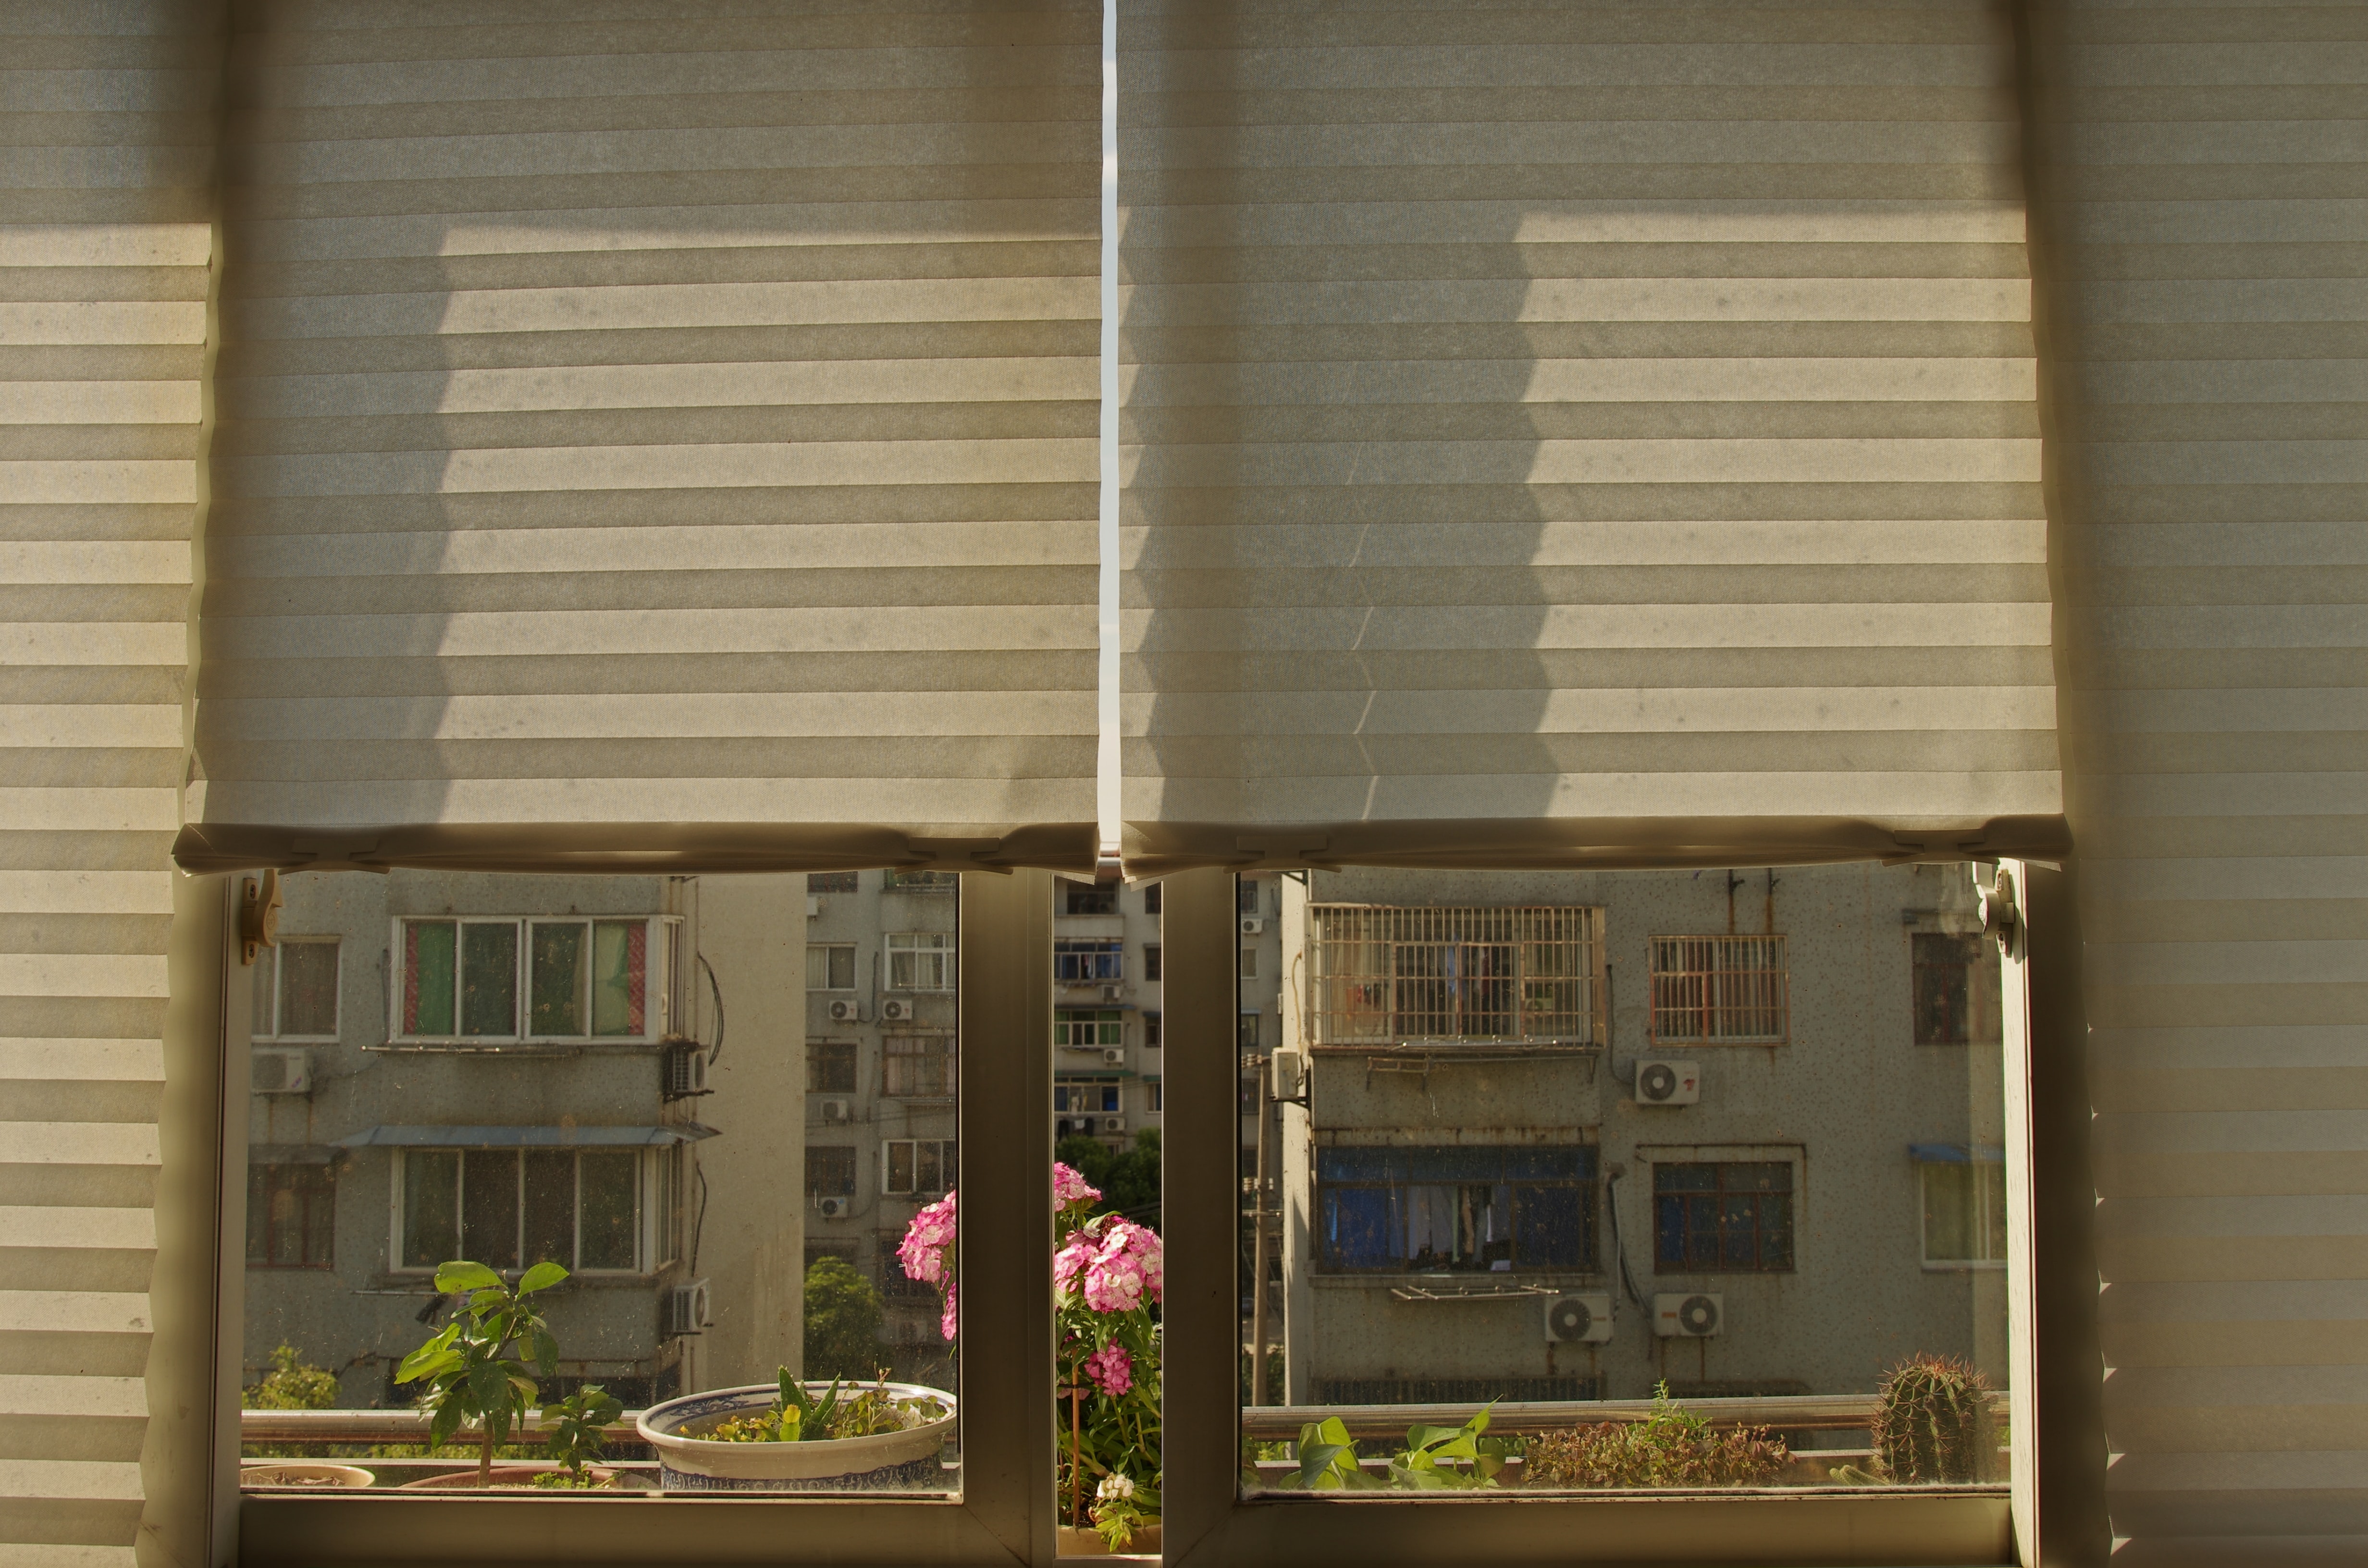 haibin wu udlwfxaCj7A unsplash - Få en helt ny og lys bolig med ovenlysvinduer